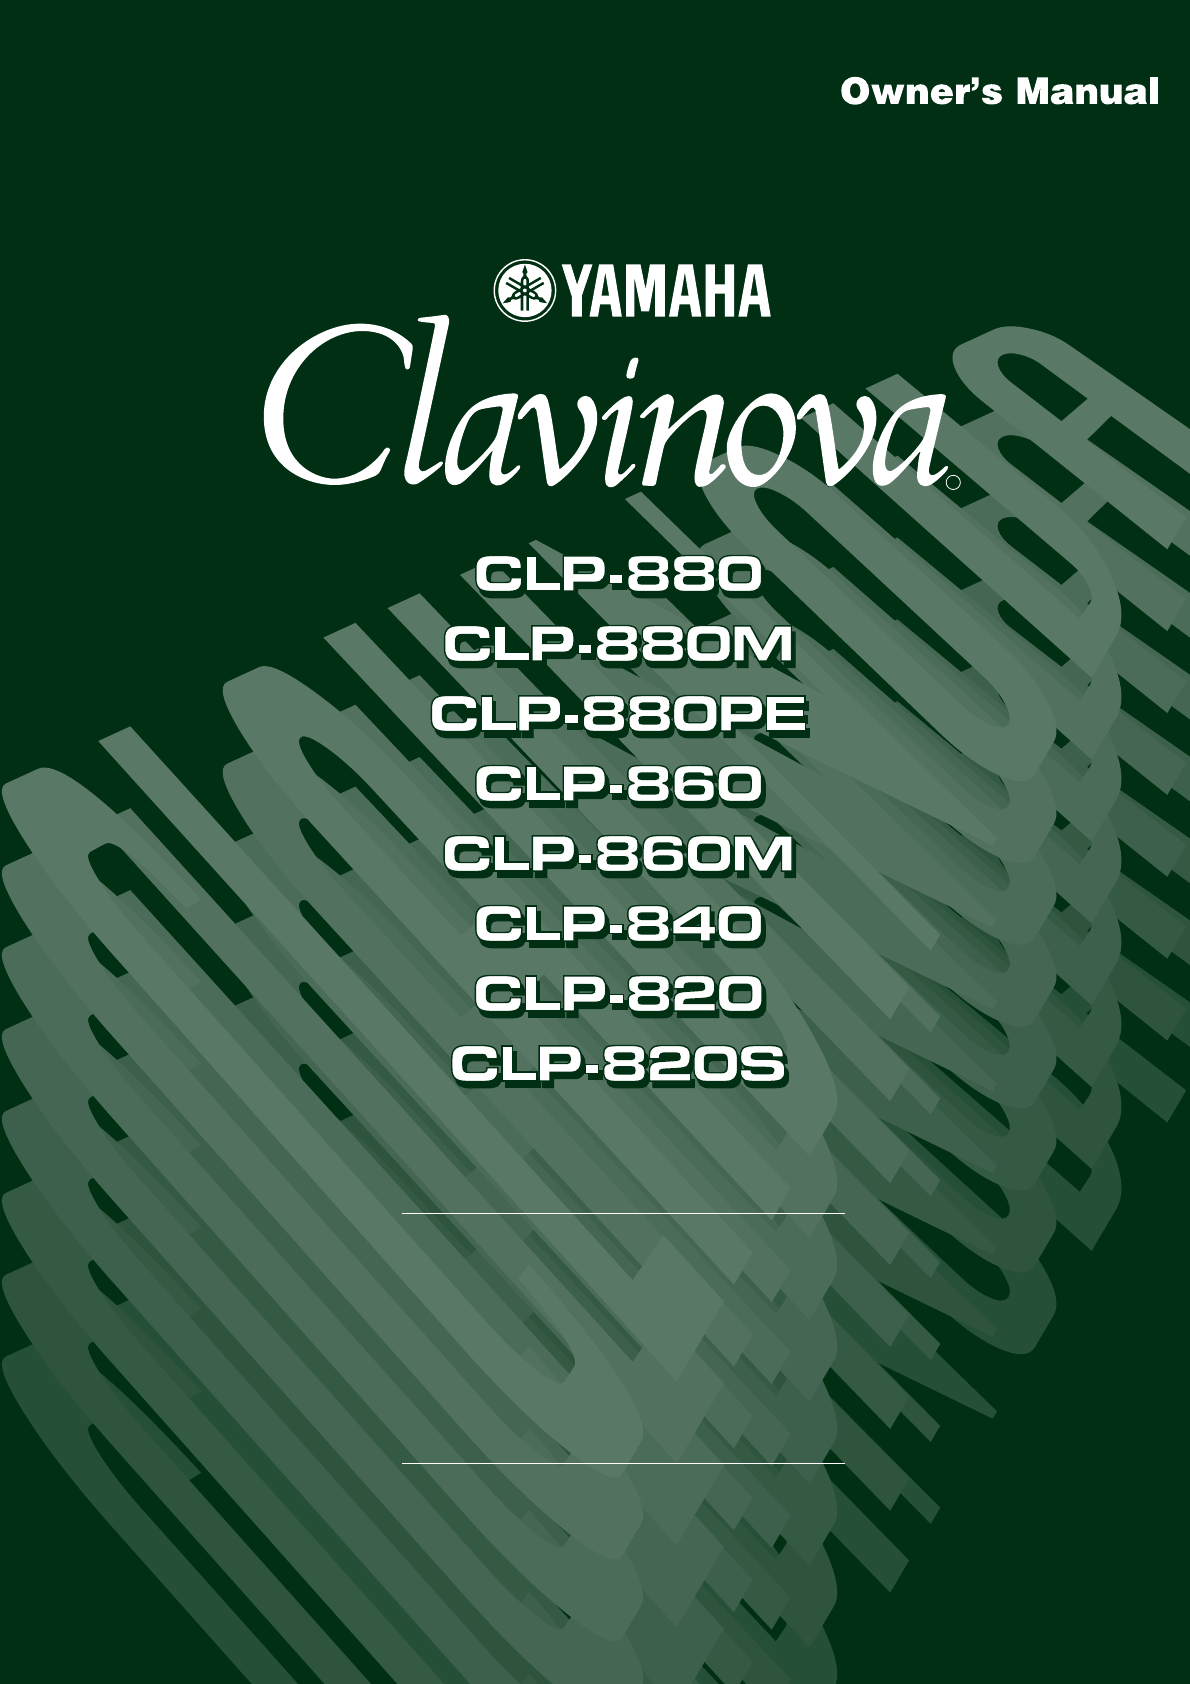 Manual Yamaha CLP-860 (page 1 of 72) (English)